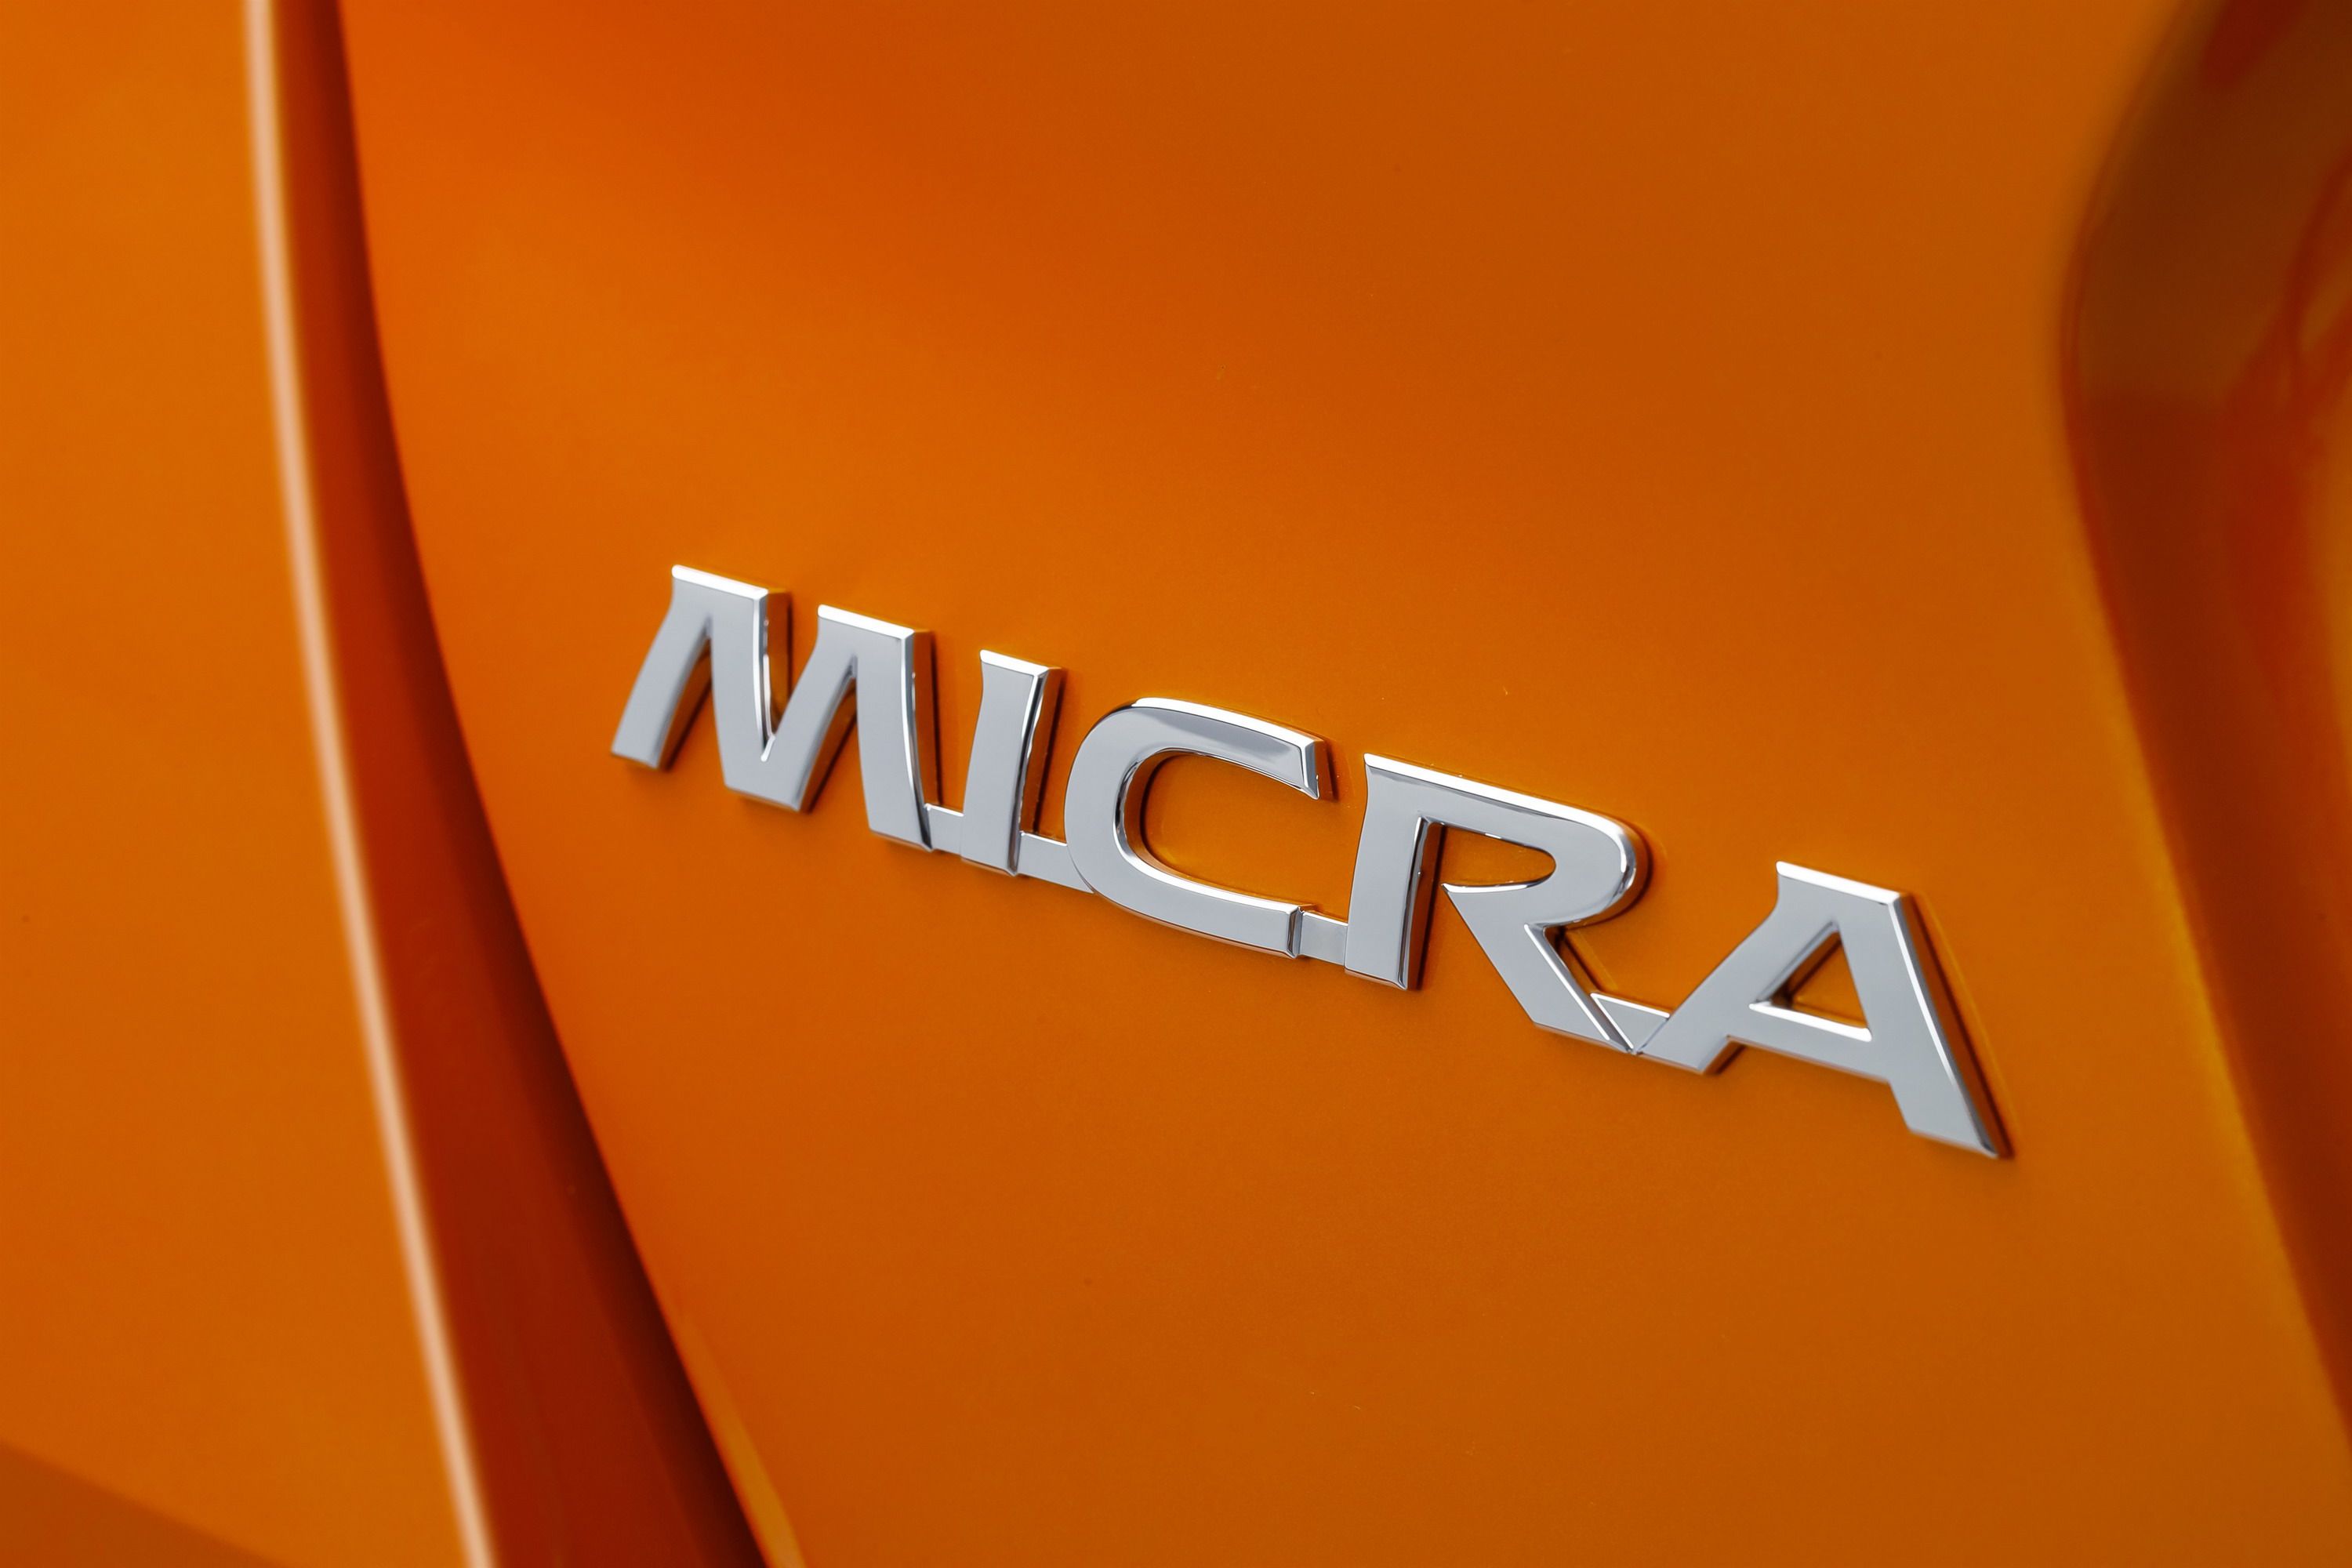 2017 Nissan Micra